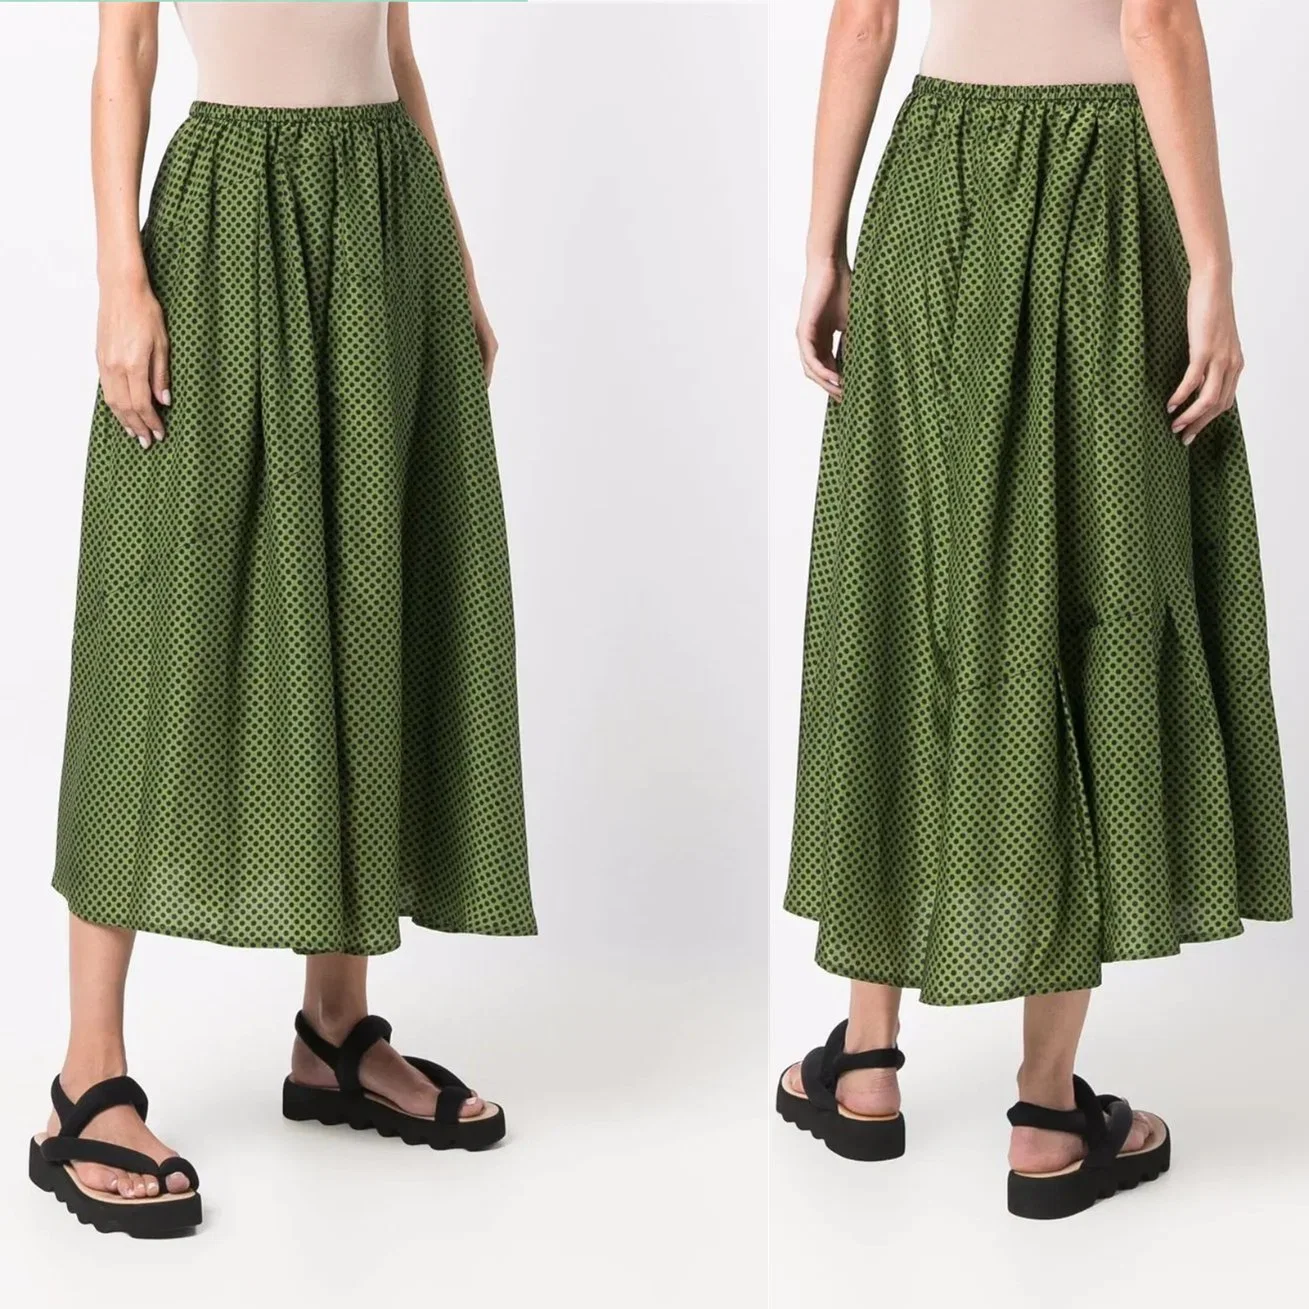 New Fashion OEM Pleat Skirt with DOT Print High Waist Women MIDI Length Casual Skirt